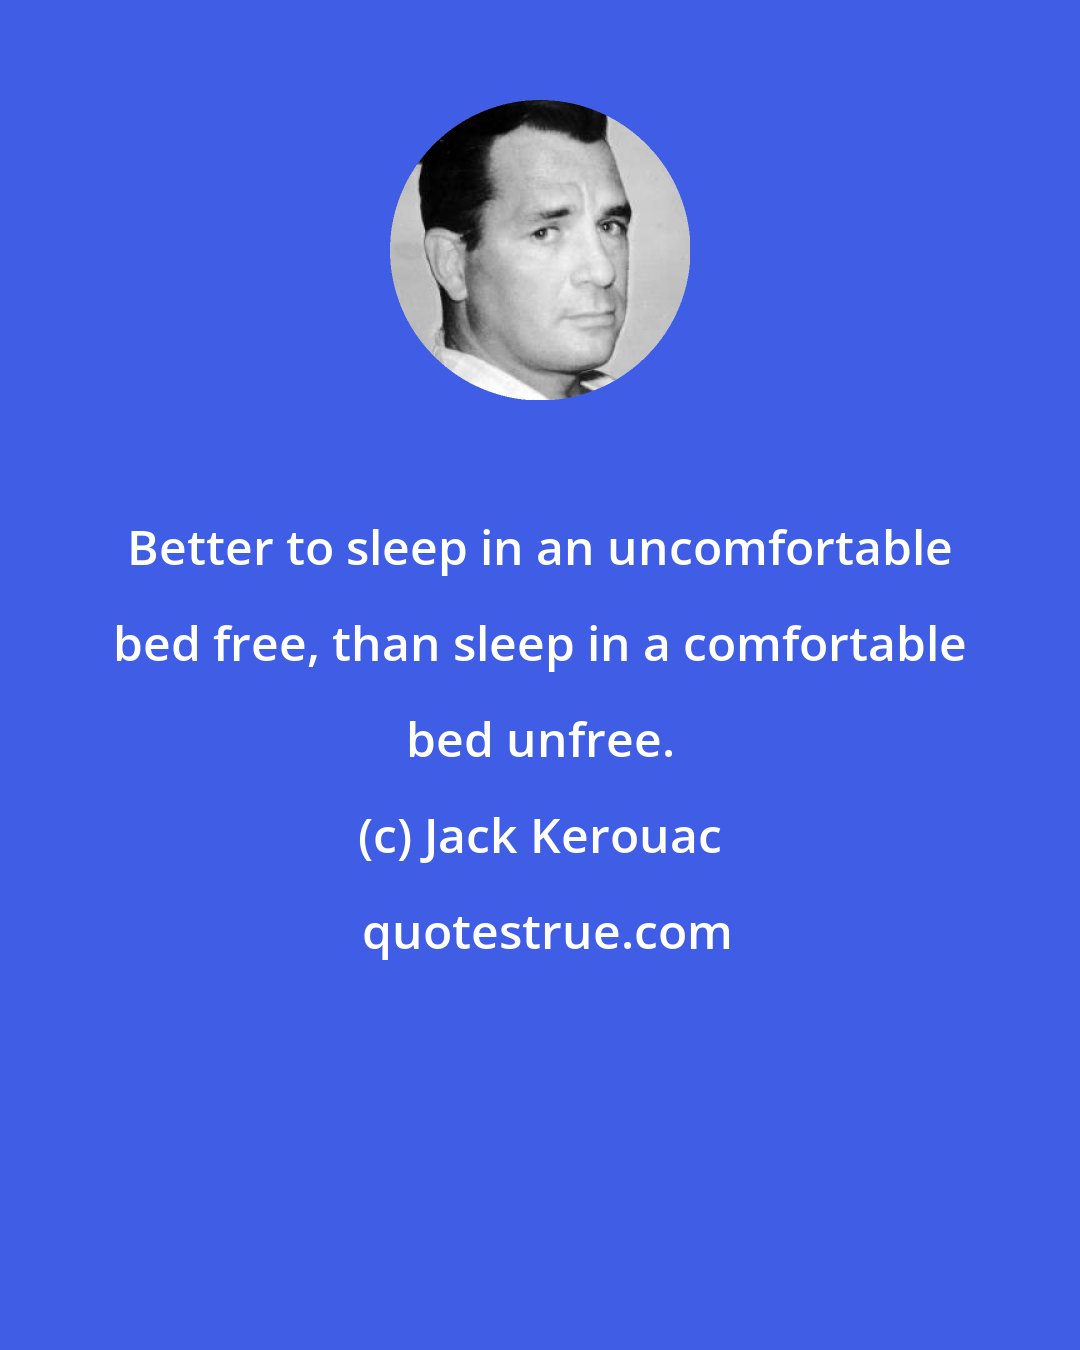 Jack Kerouac: Better to sleep in an uncomfortable bed free, than sleep in a comfortable bed unfree.